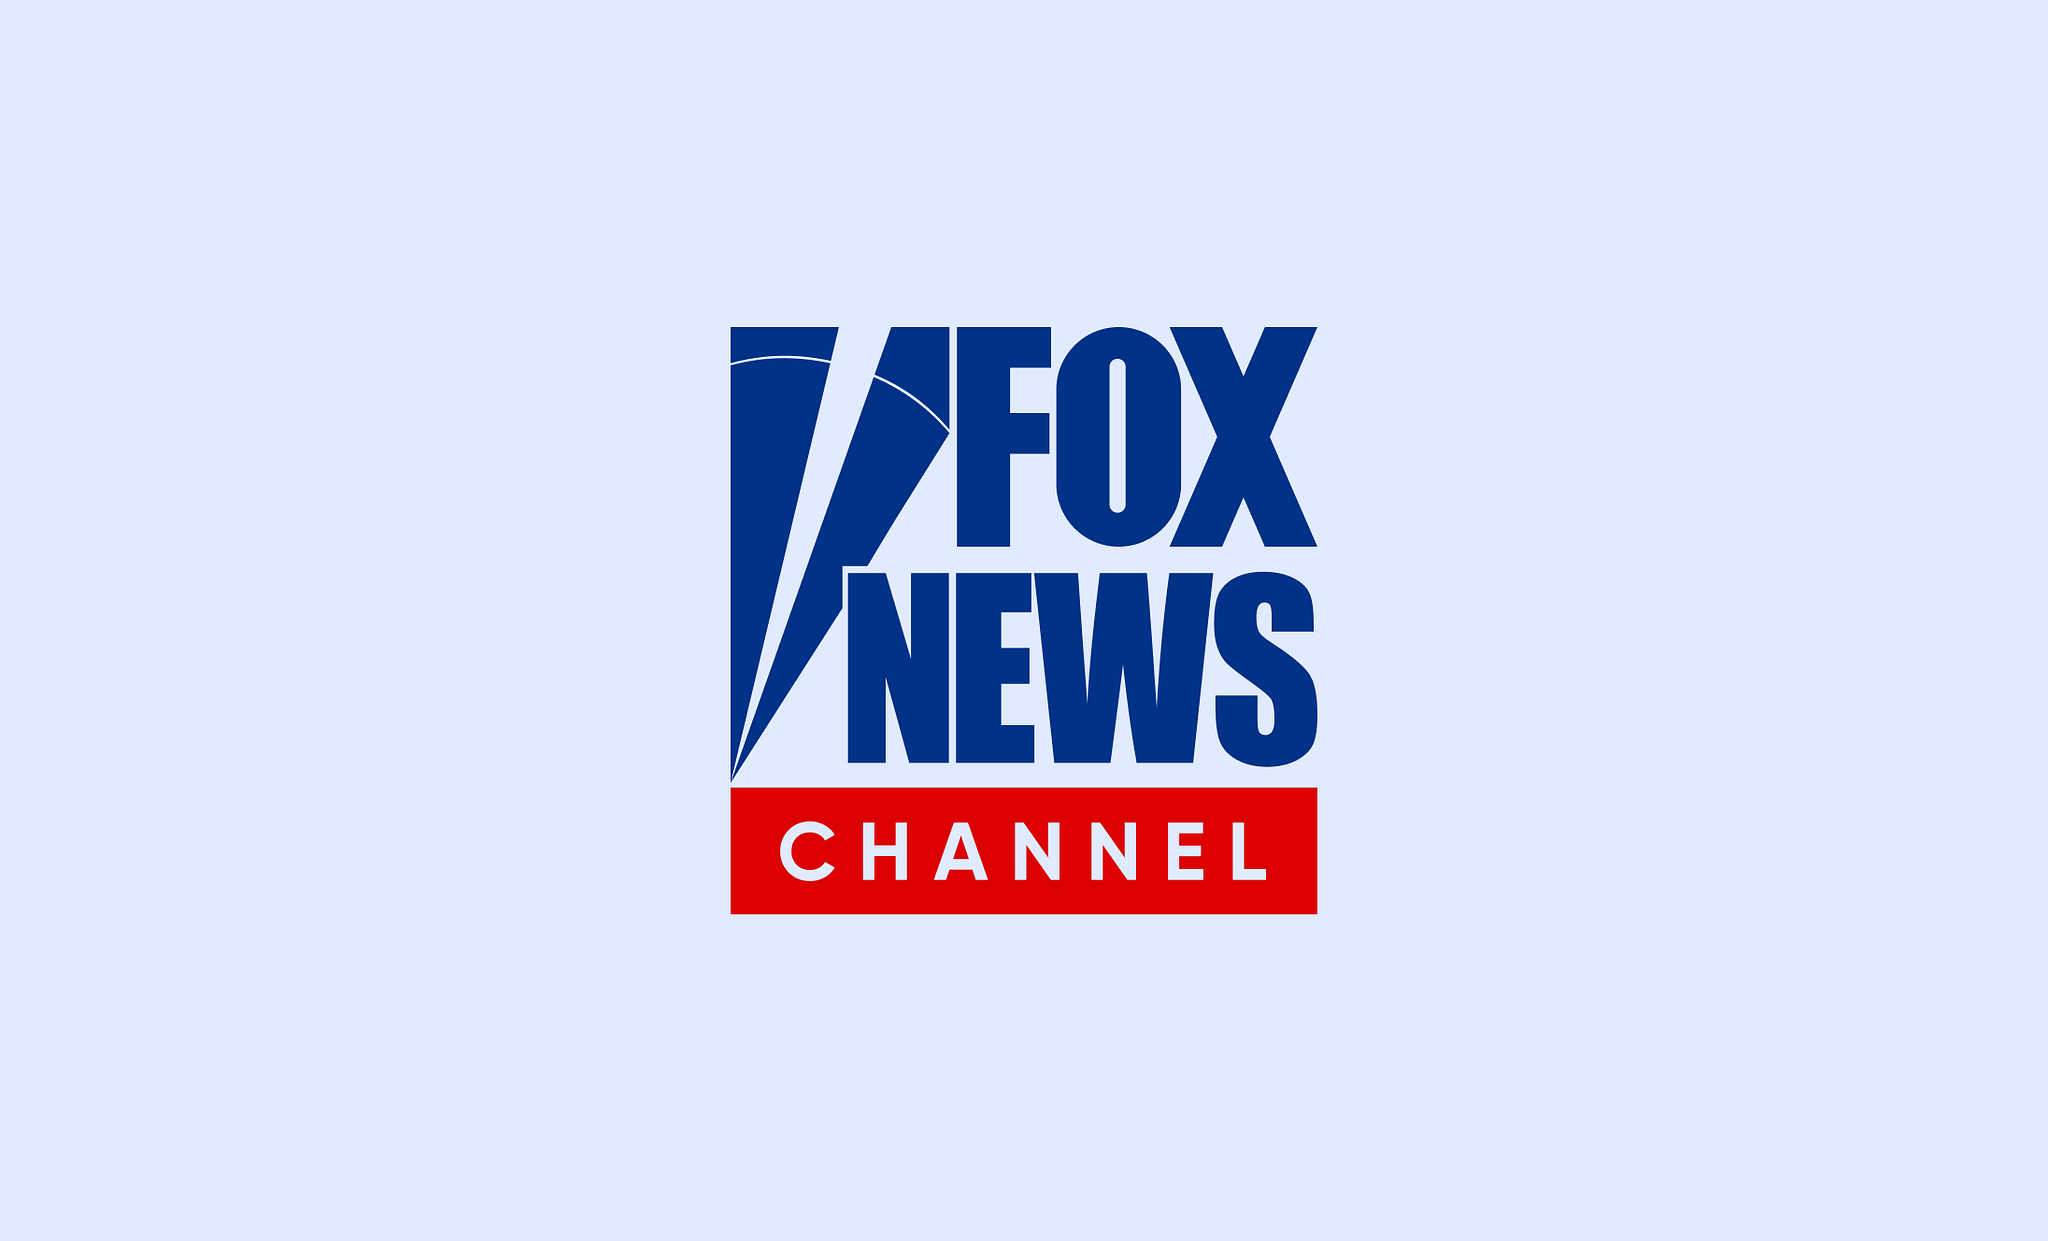 Fox News Rebranding Concept by Ashik 🕸 on Dribbble